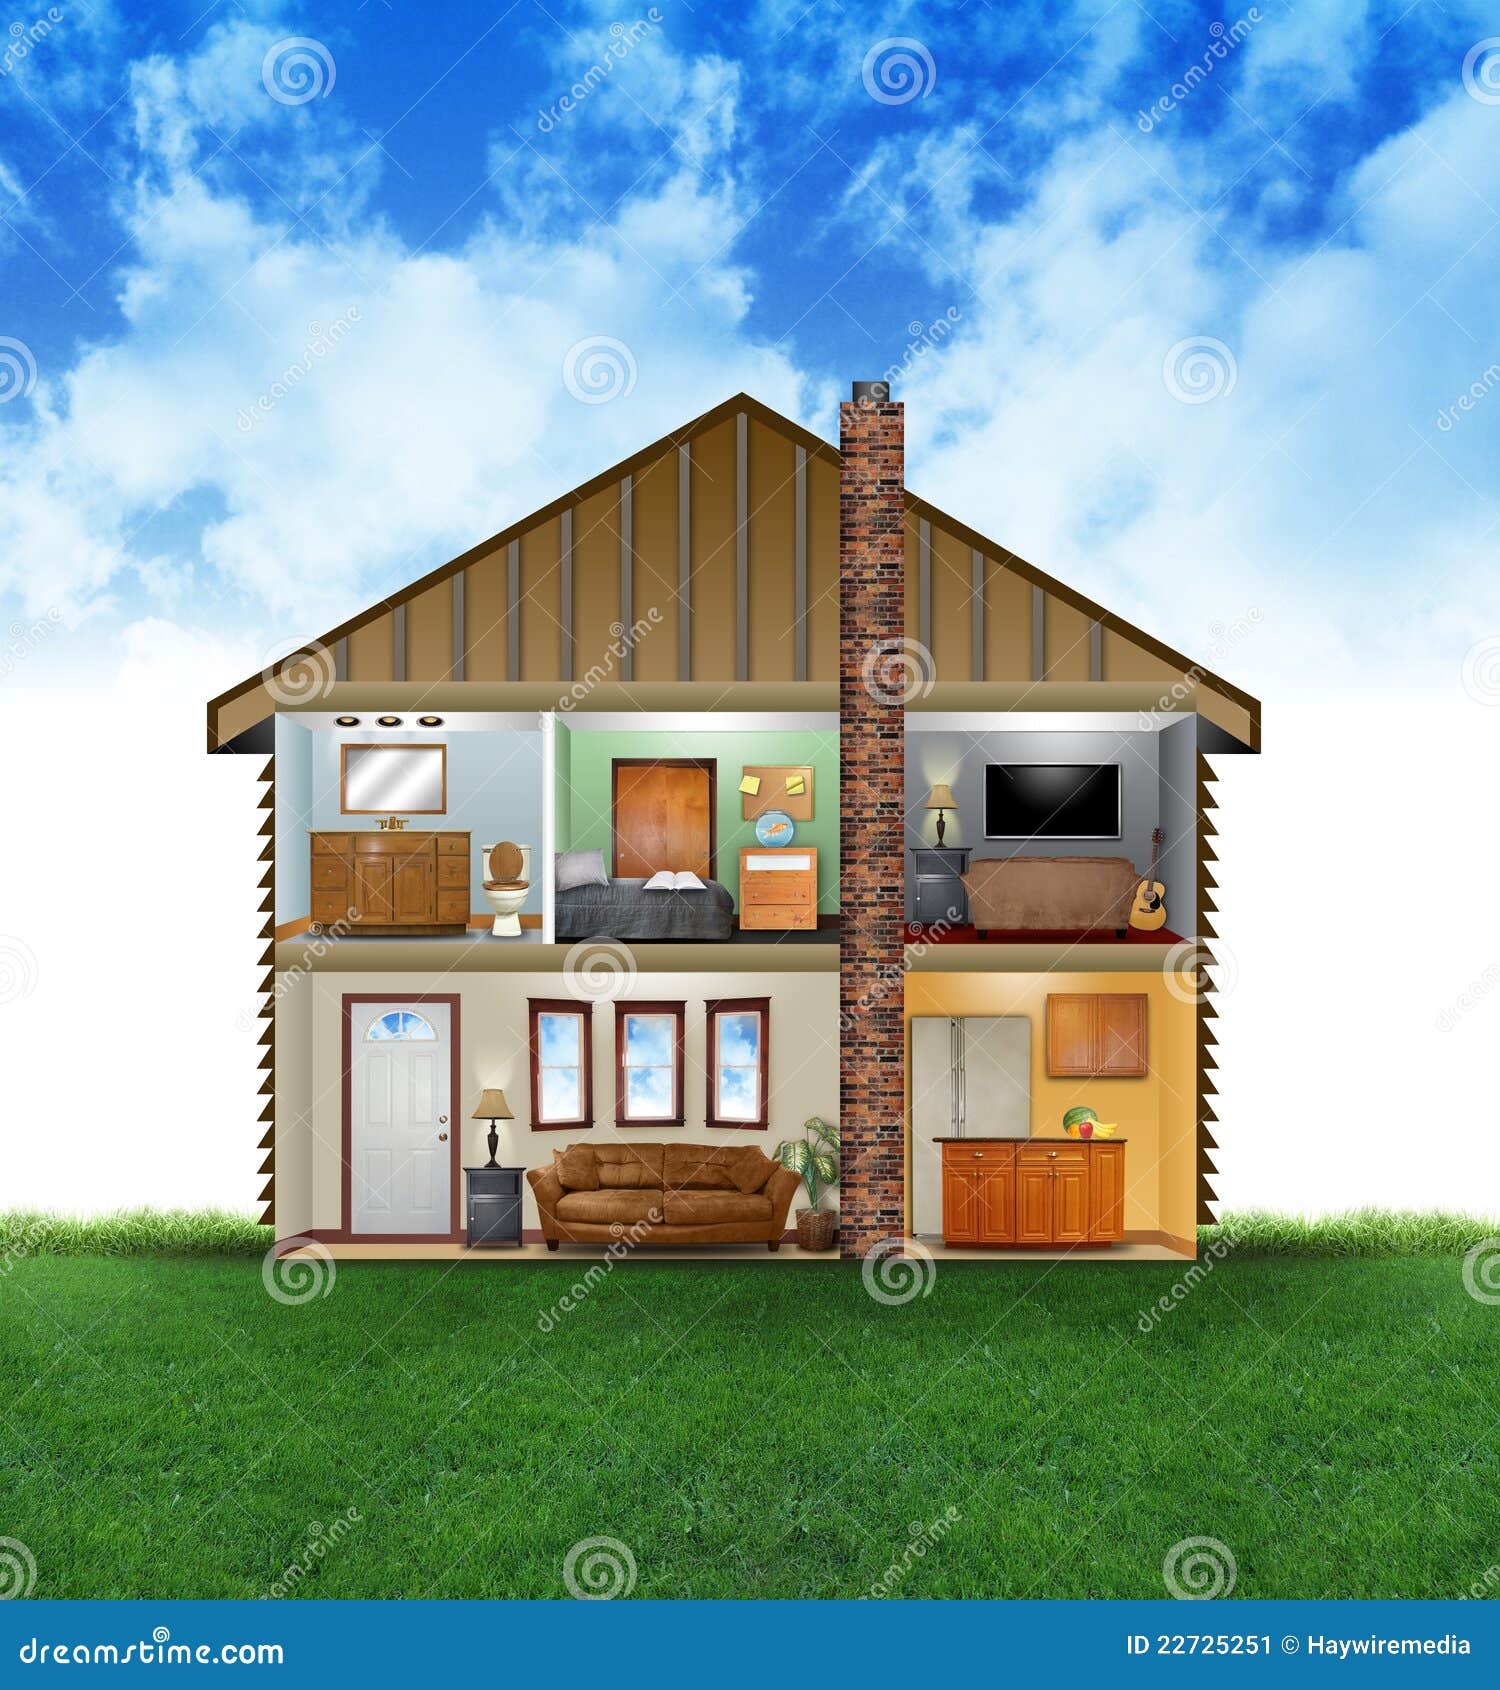 Eco Friendly House Interior Stock Image - Image: 22725251